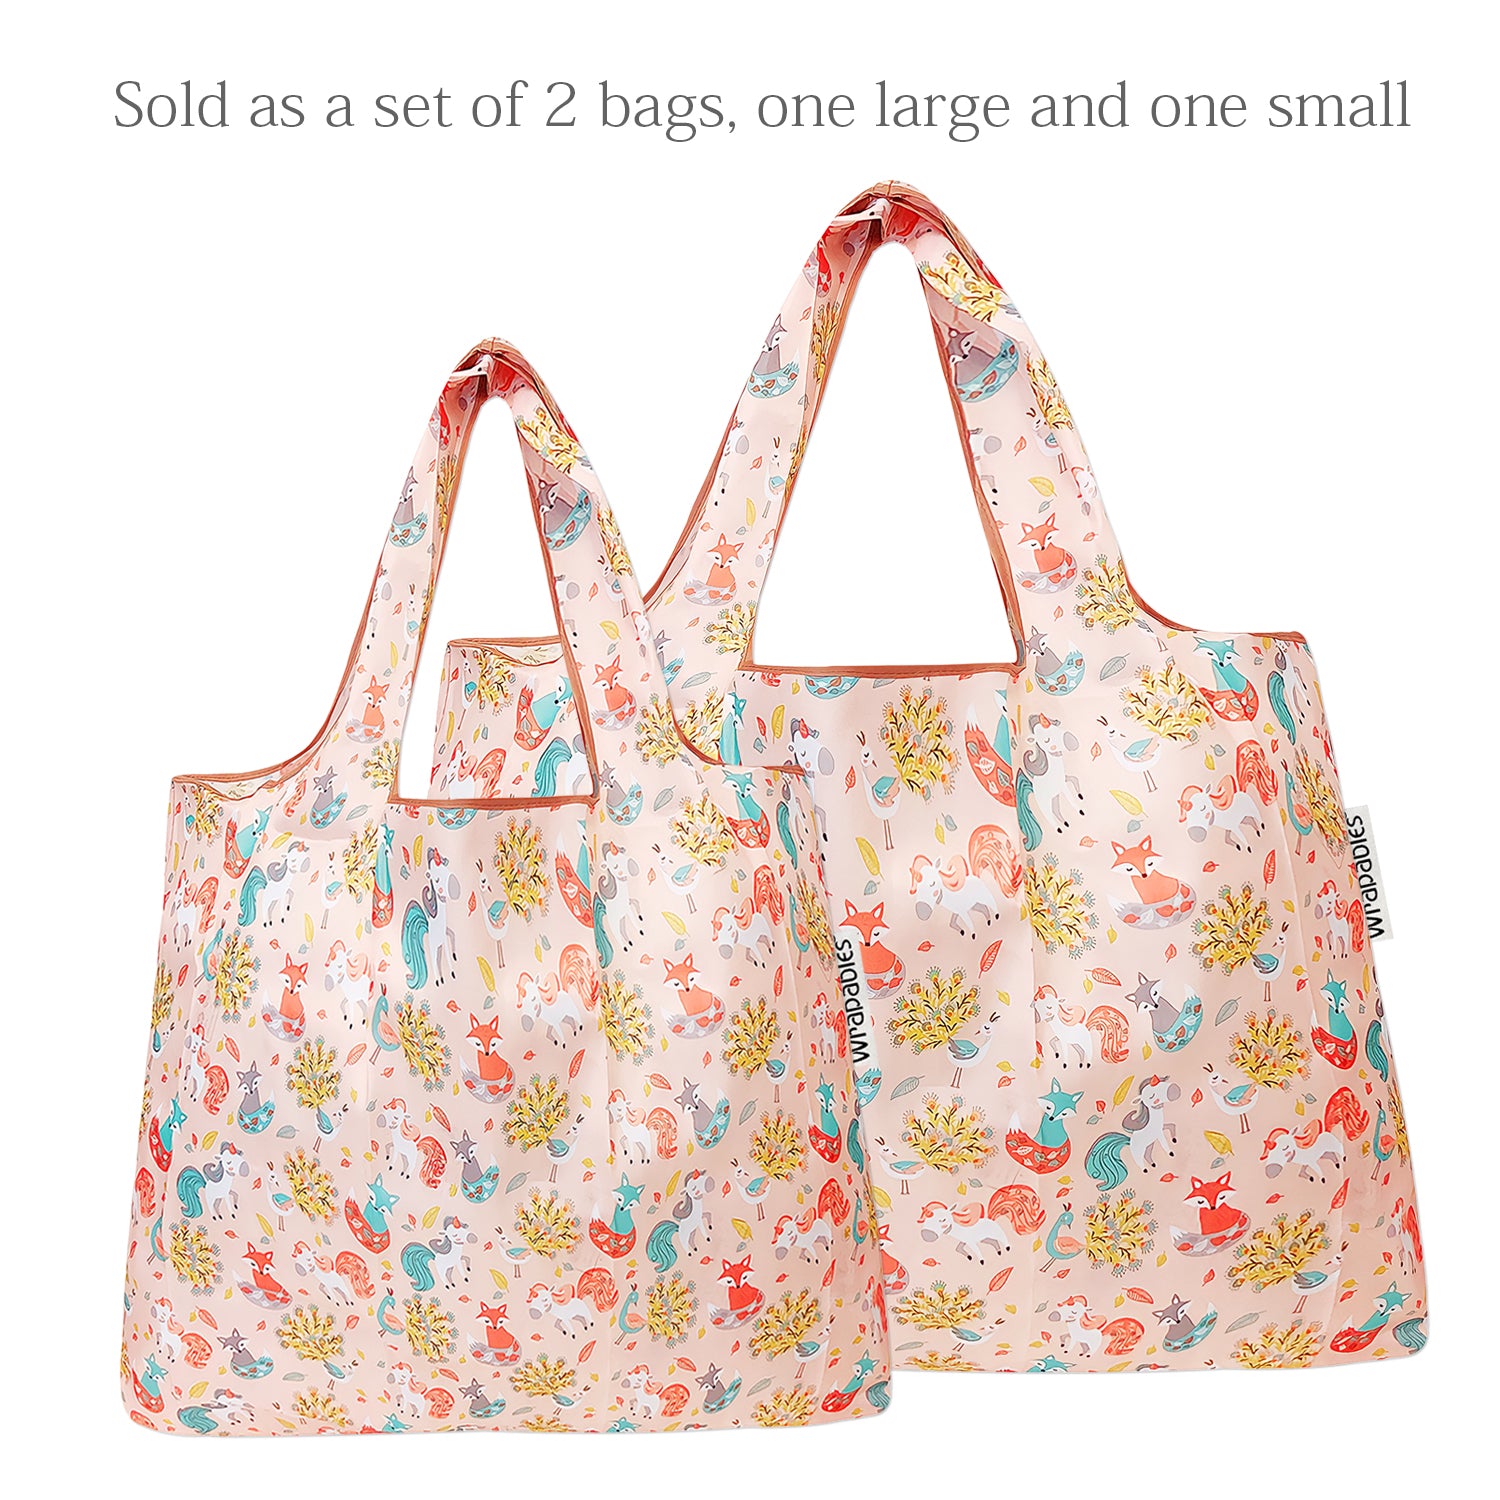 Custom Foldable Reusable Shopping Grocery Bags